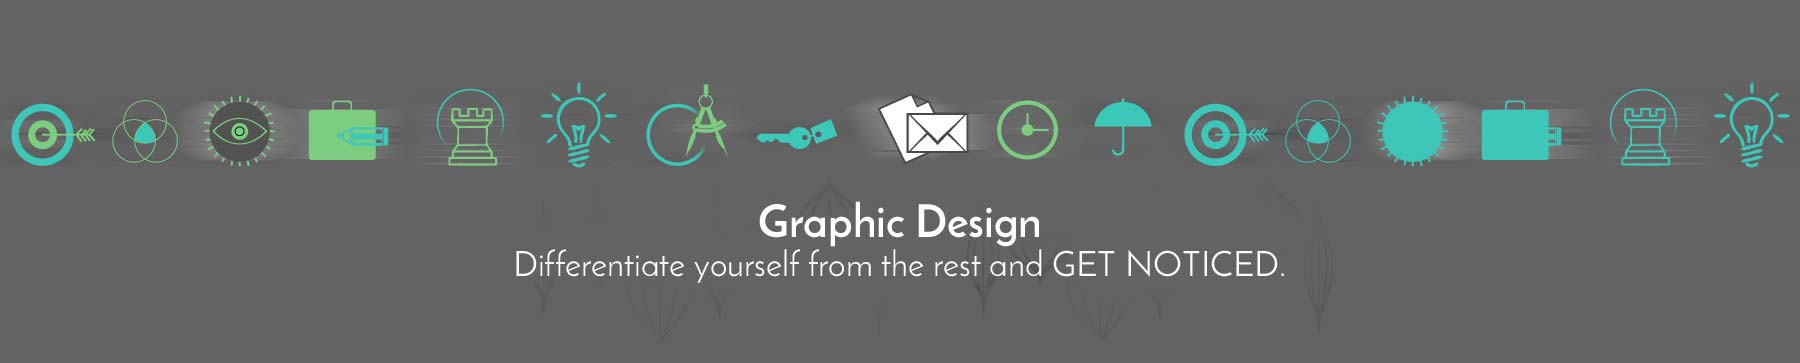 Fort lauderdale Web, Graphic Design Company